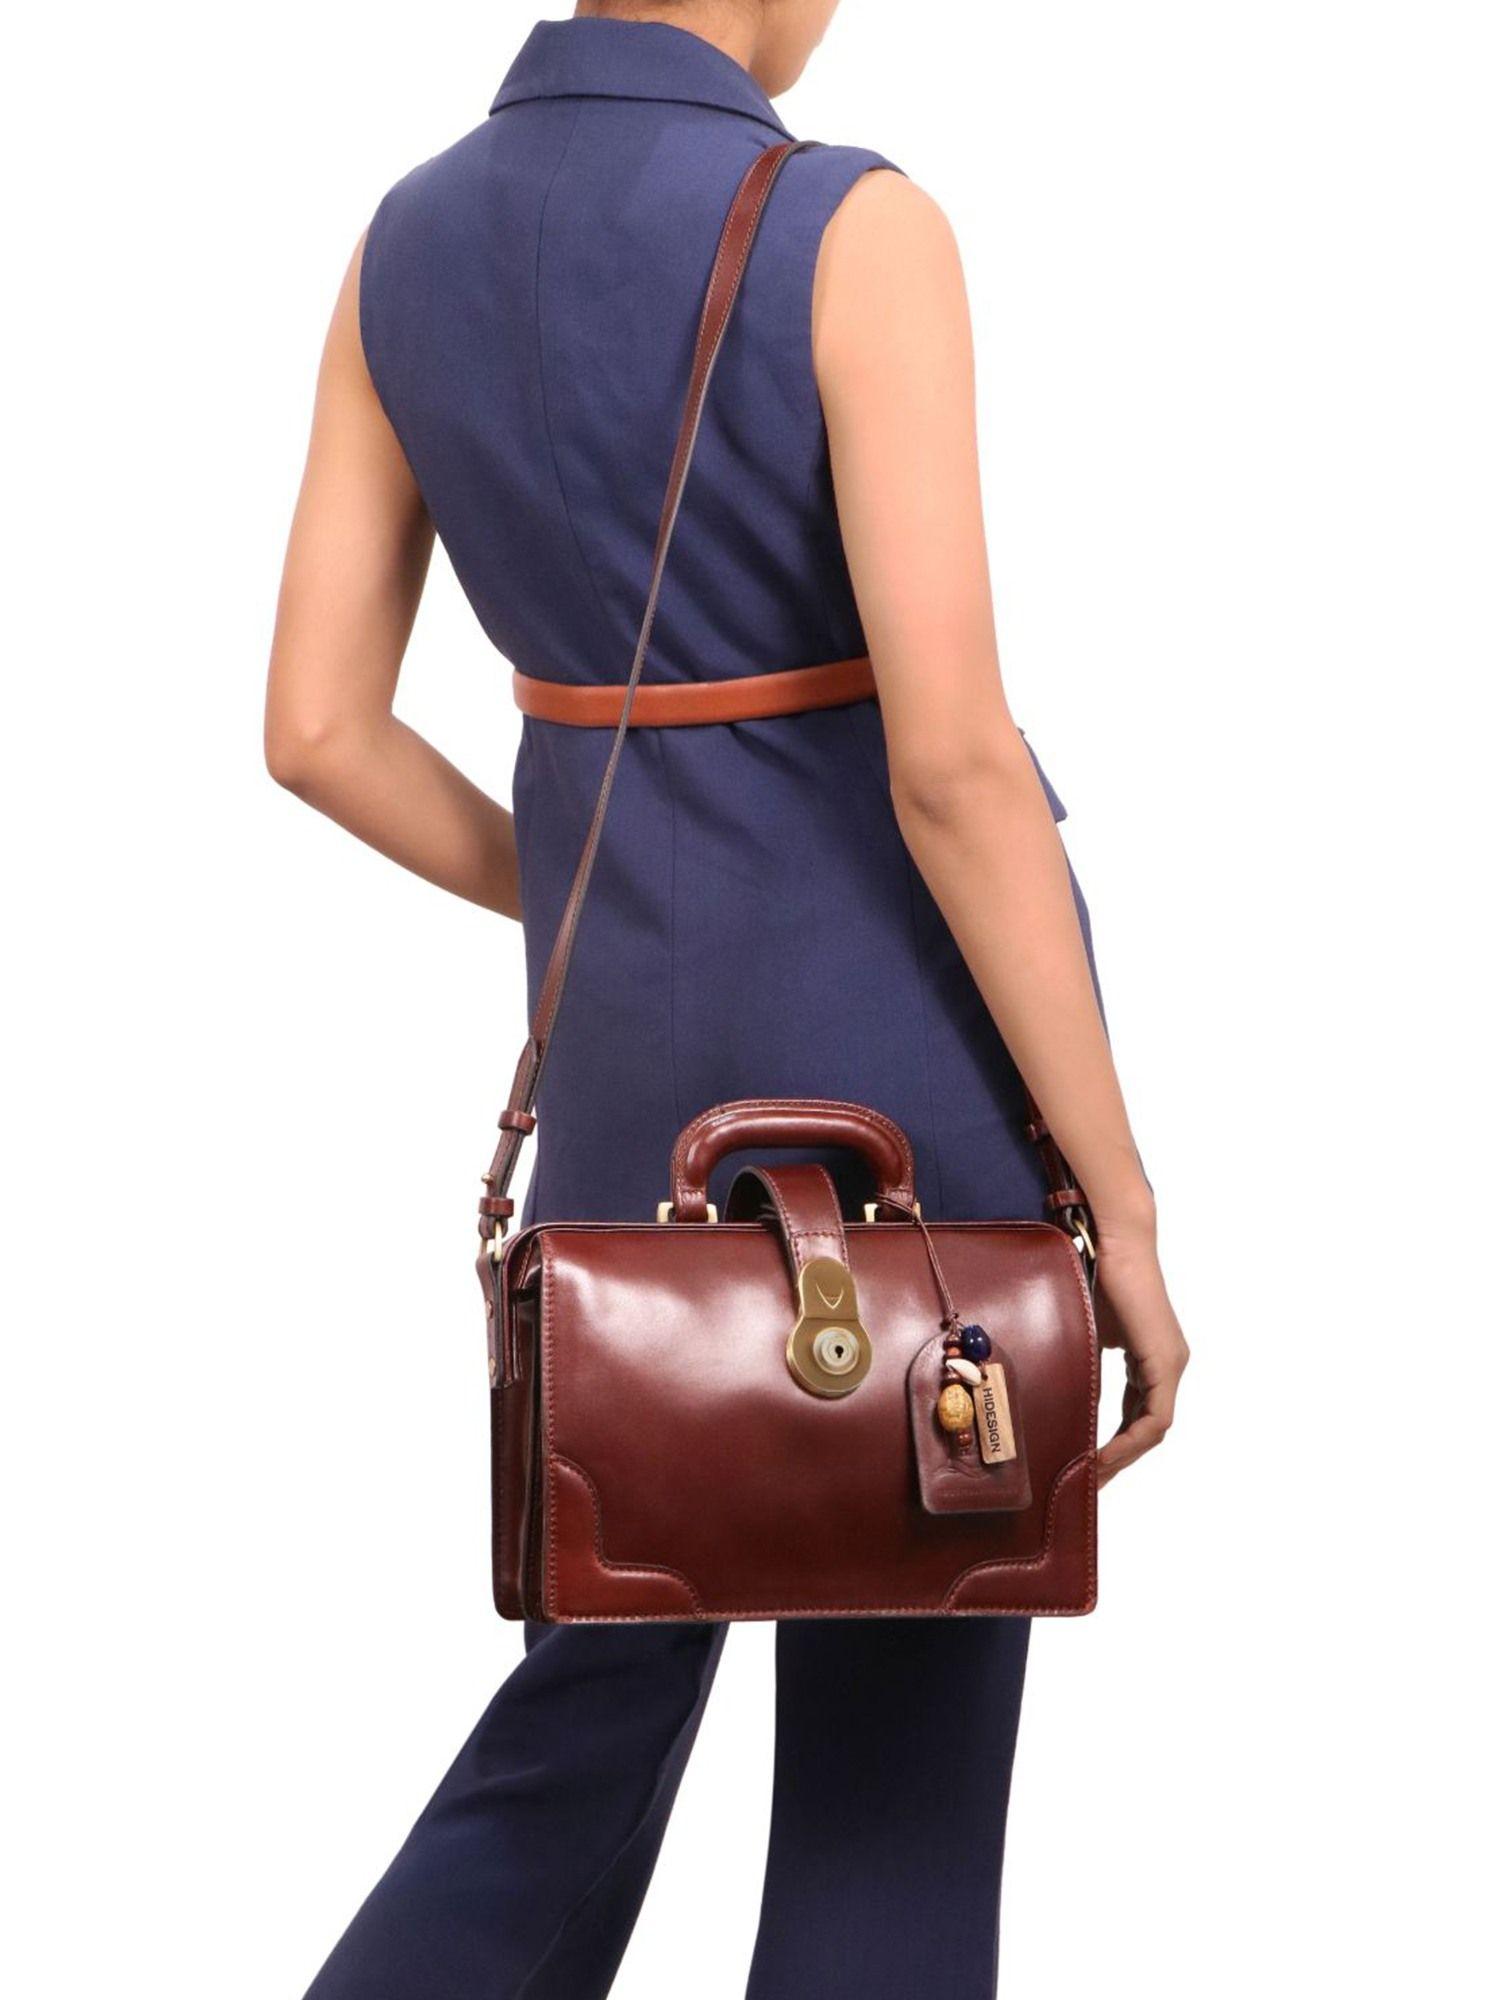 growth 04 formal brown women's office handbag (m)